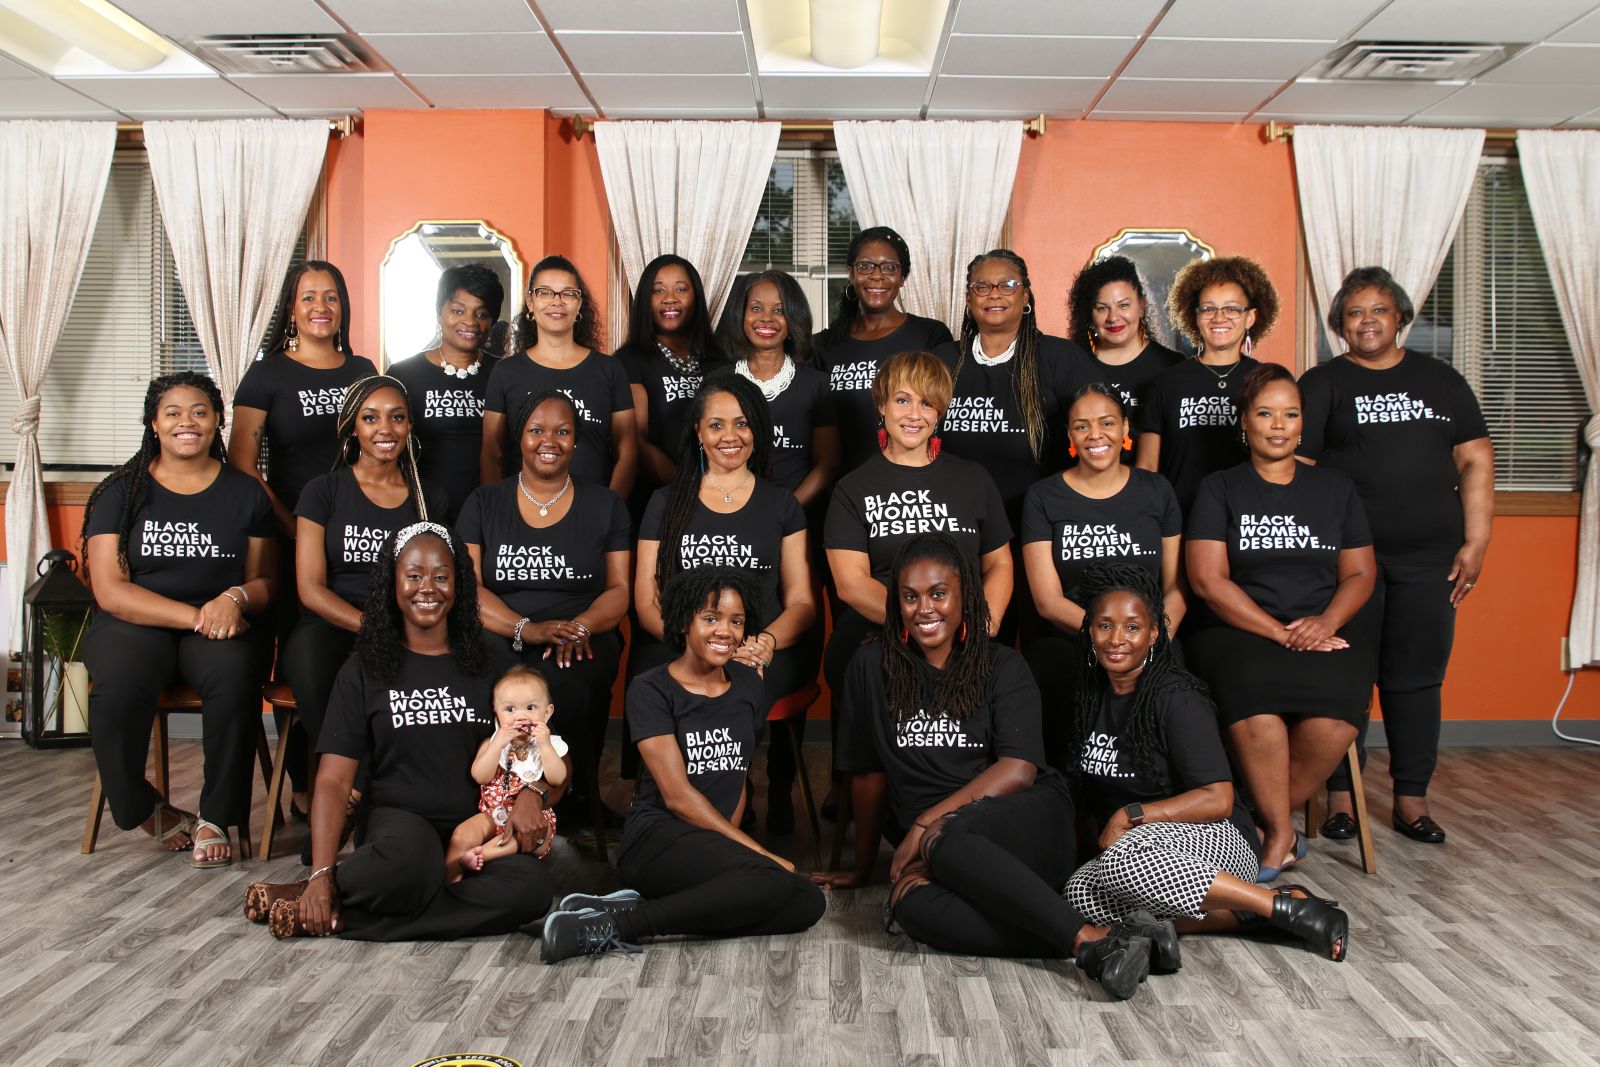 Foundation for Black Women's Wellness Supporters in Black Women Deserve... shirt